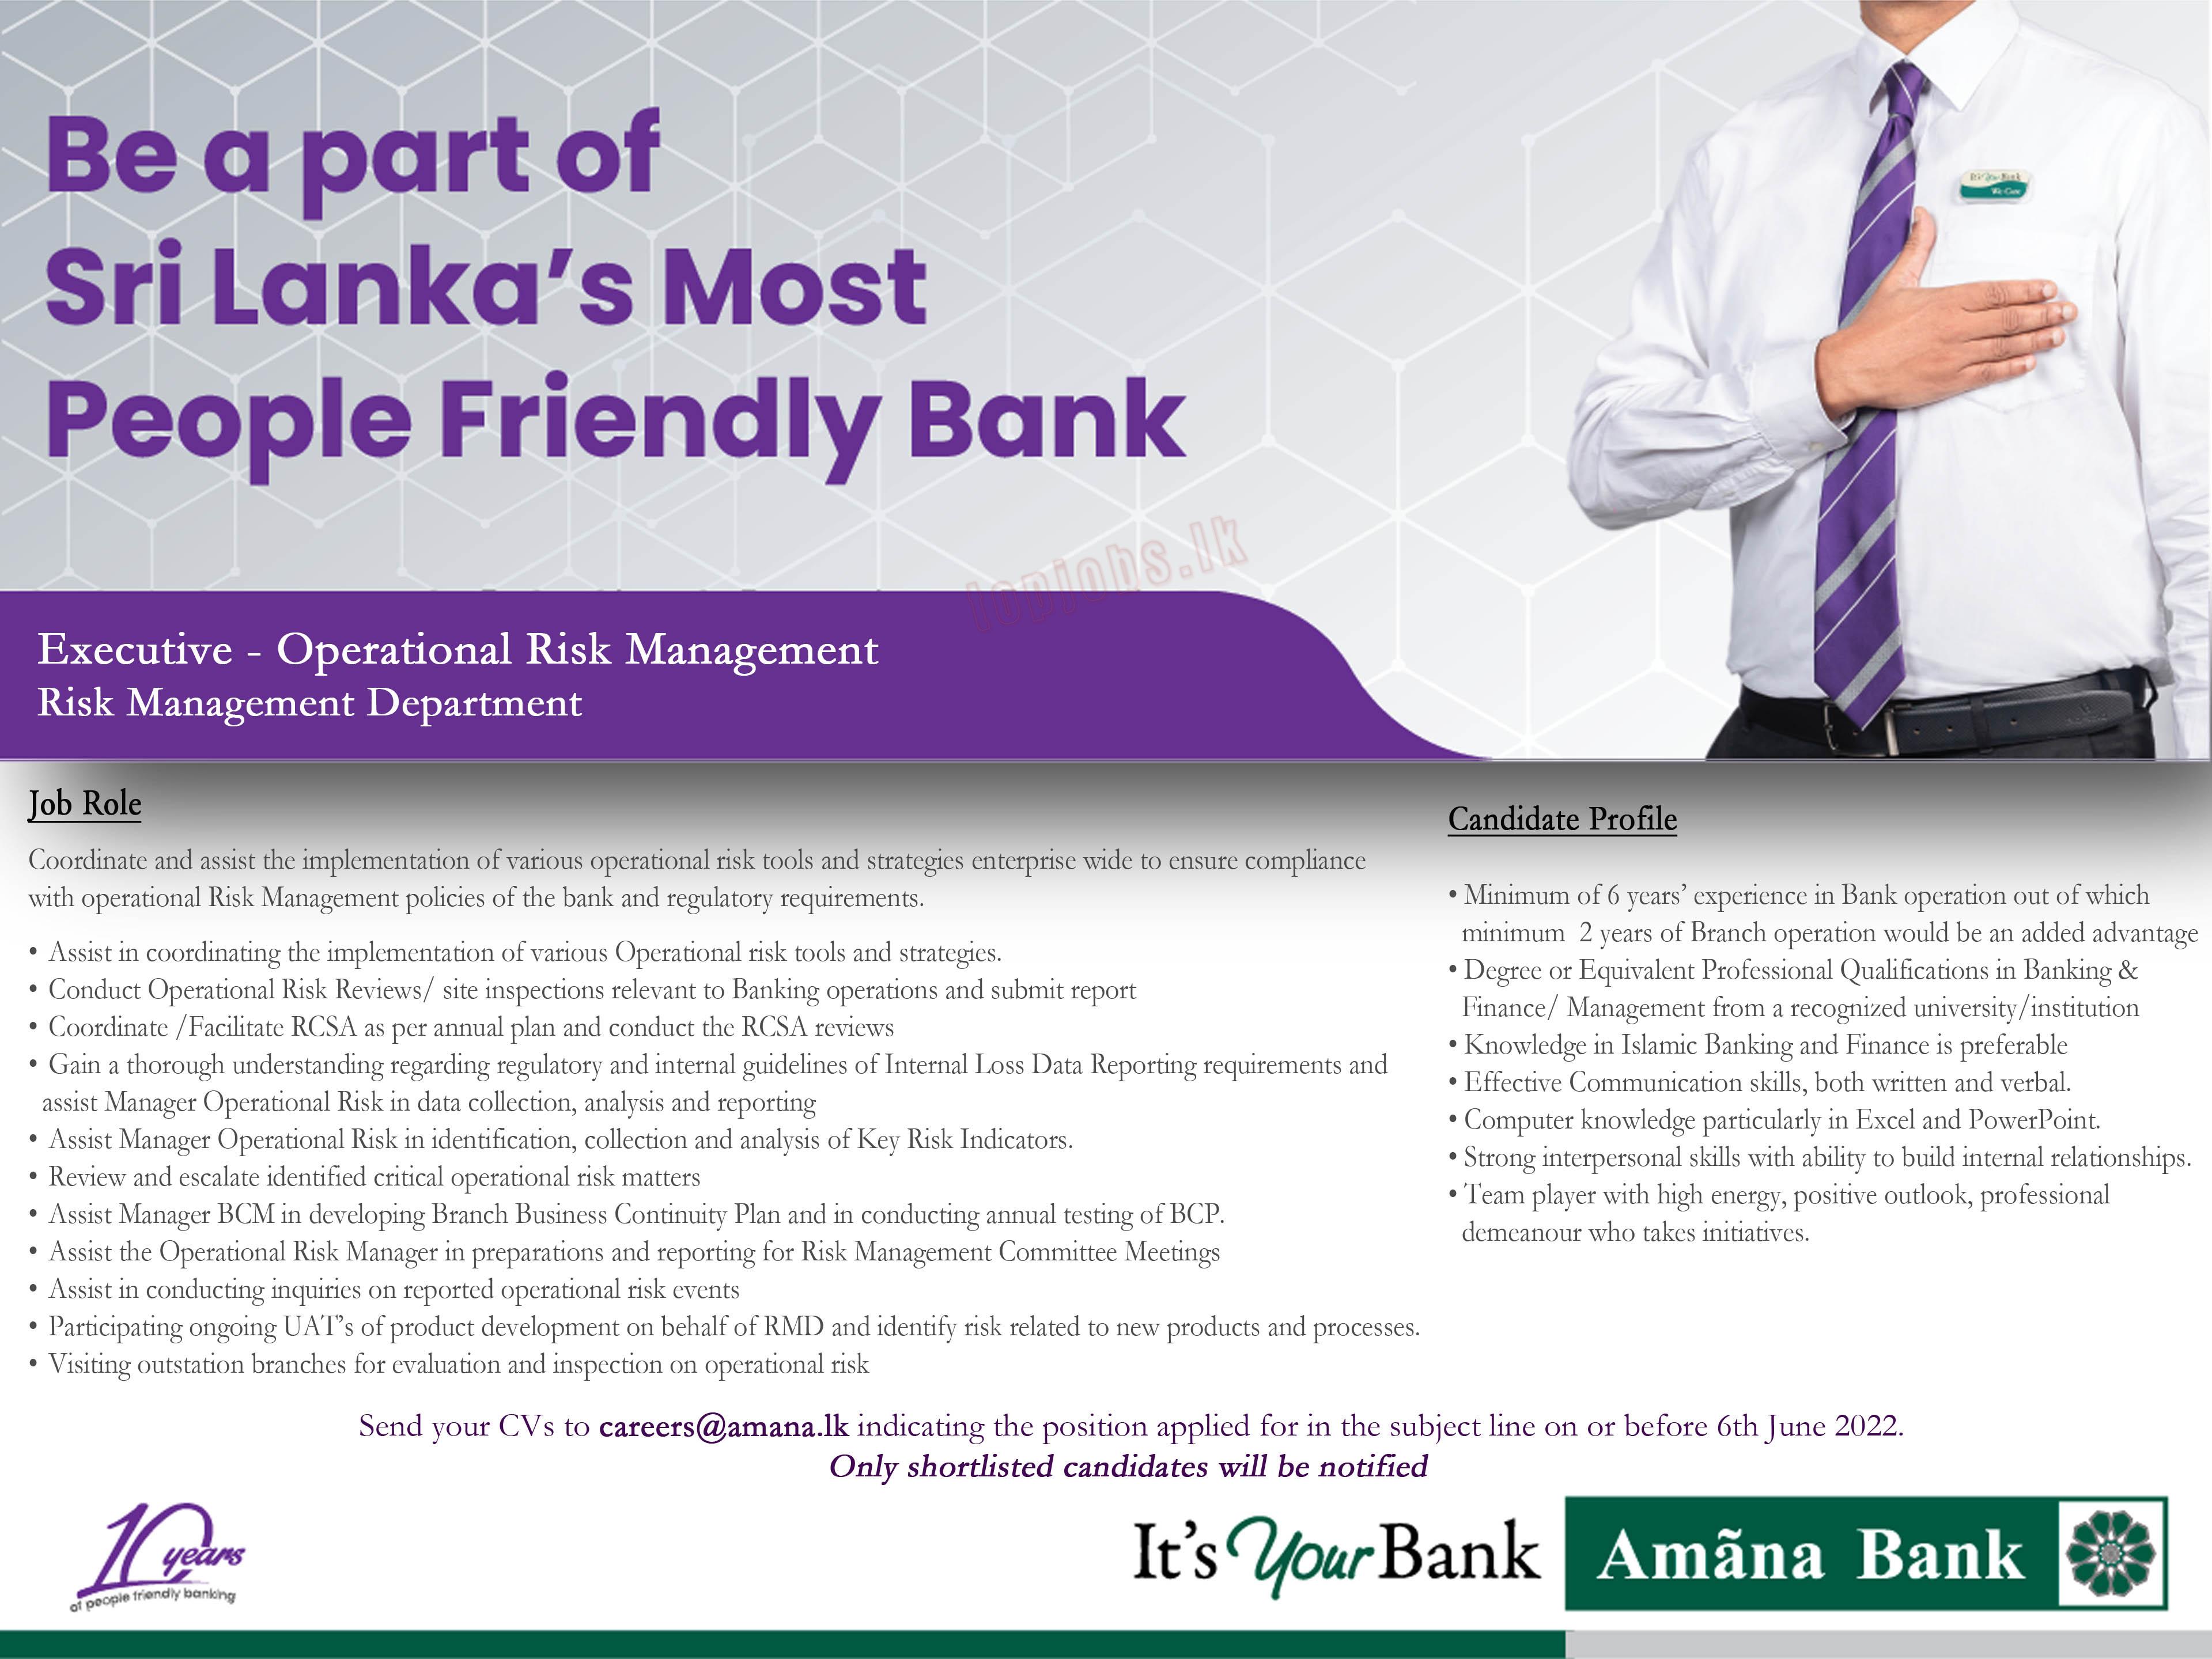 Executive (Operational Risk Management) Vacancy - Amana Bank Jobs Vacancies